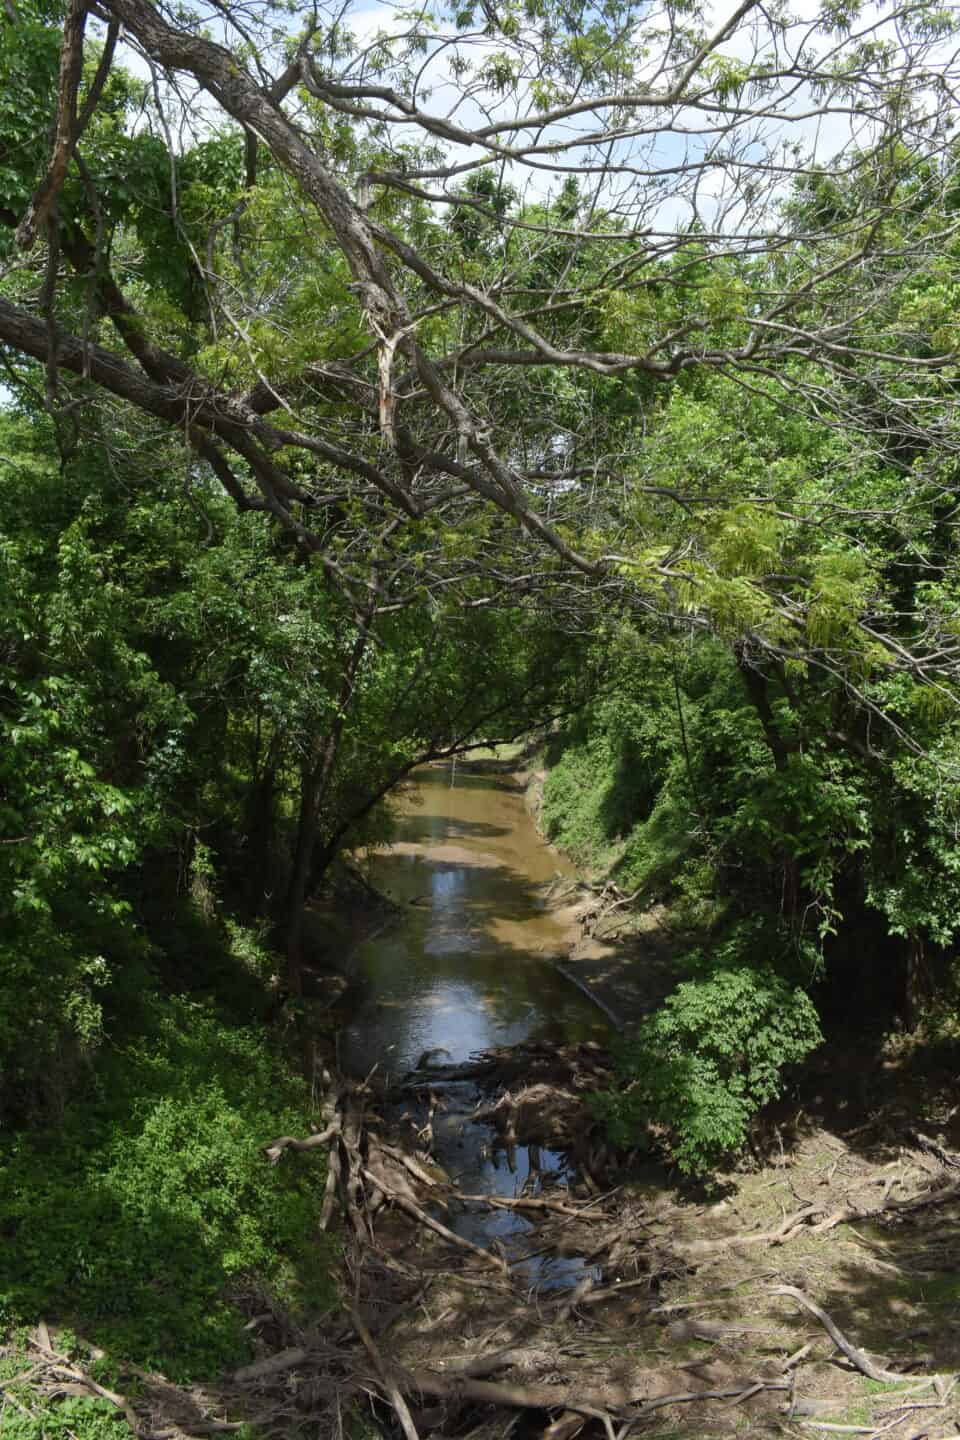 Big Sandy Creek from the Bridge on Sayer's Road, Bastrop TX birding hotspot guide